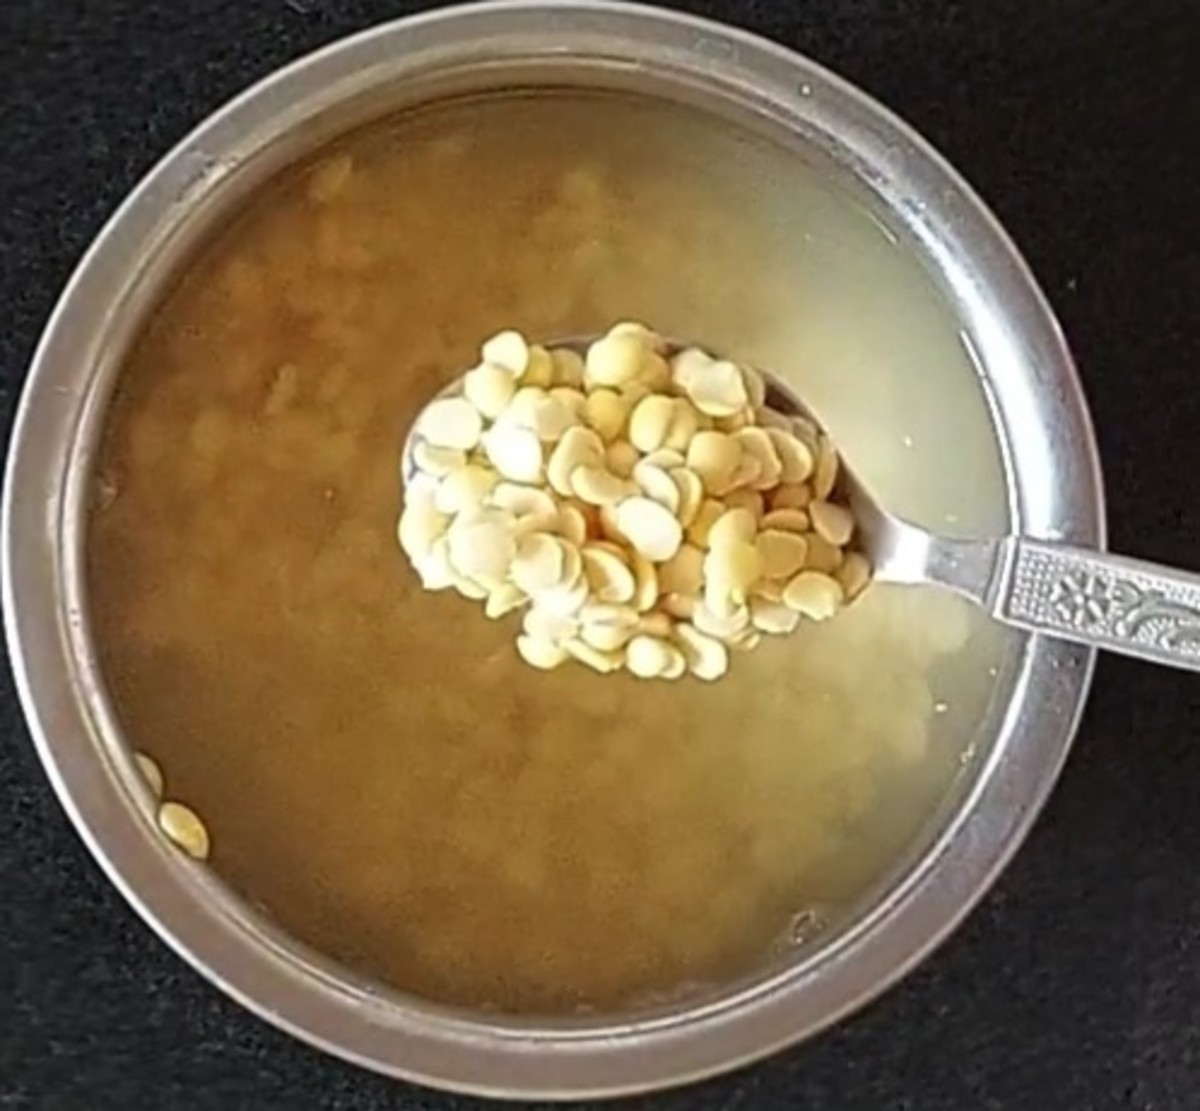 Soak 1/2 cup of toor dal (pigeon pea lentils) for 30 minutes.